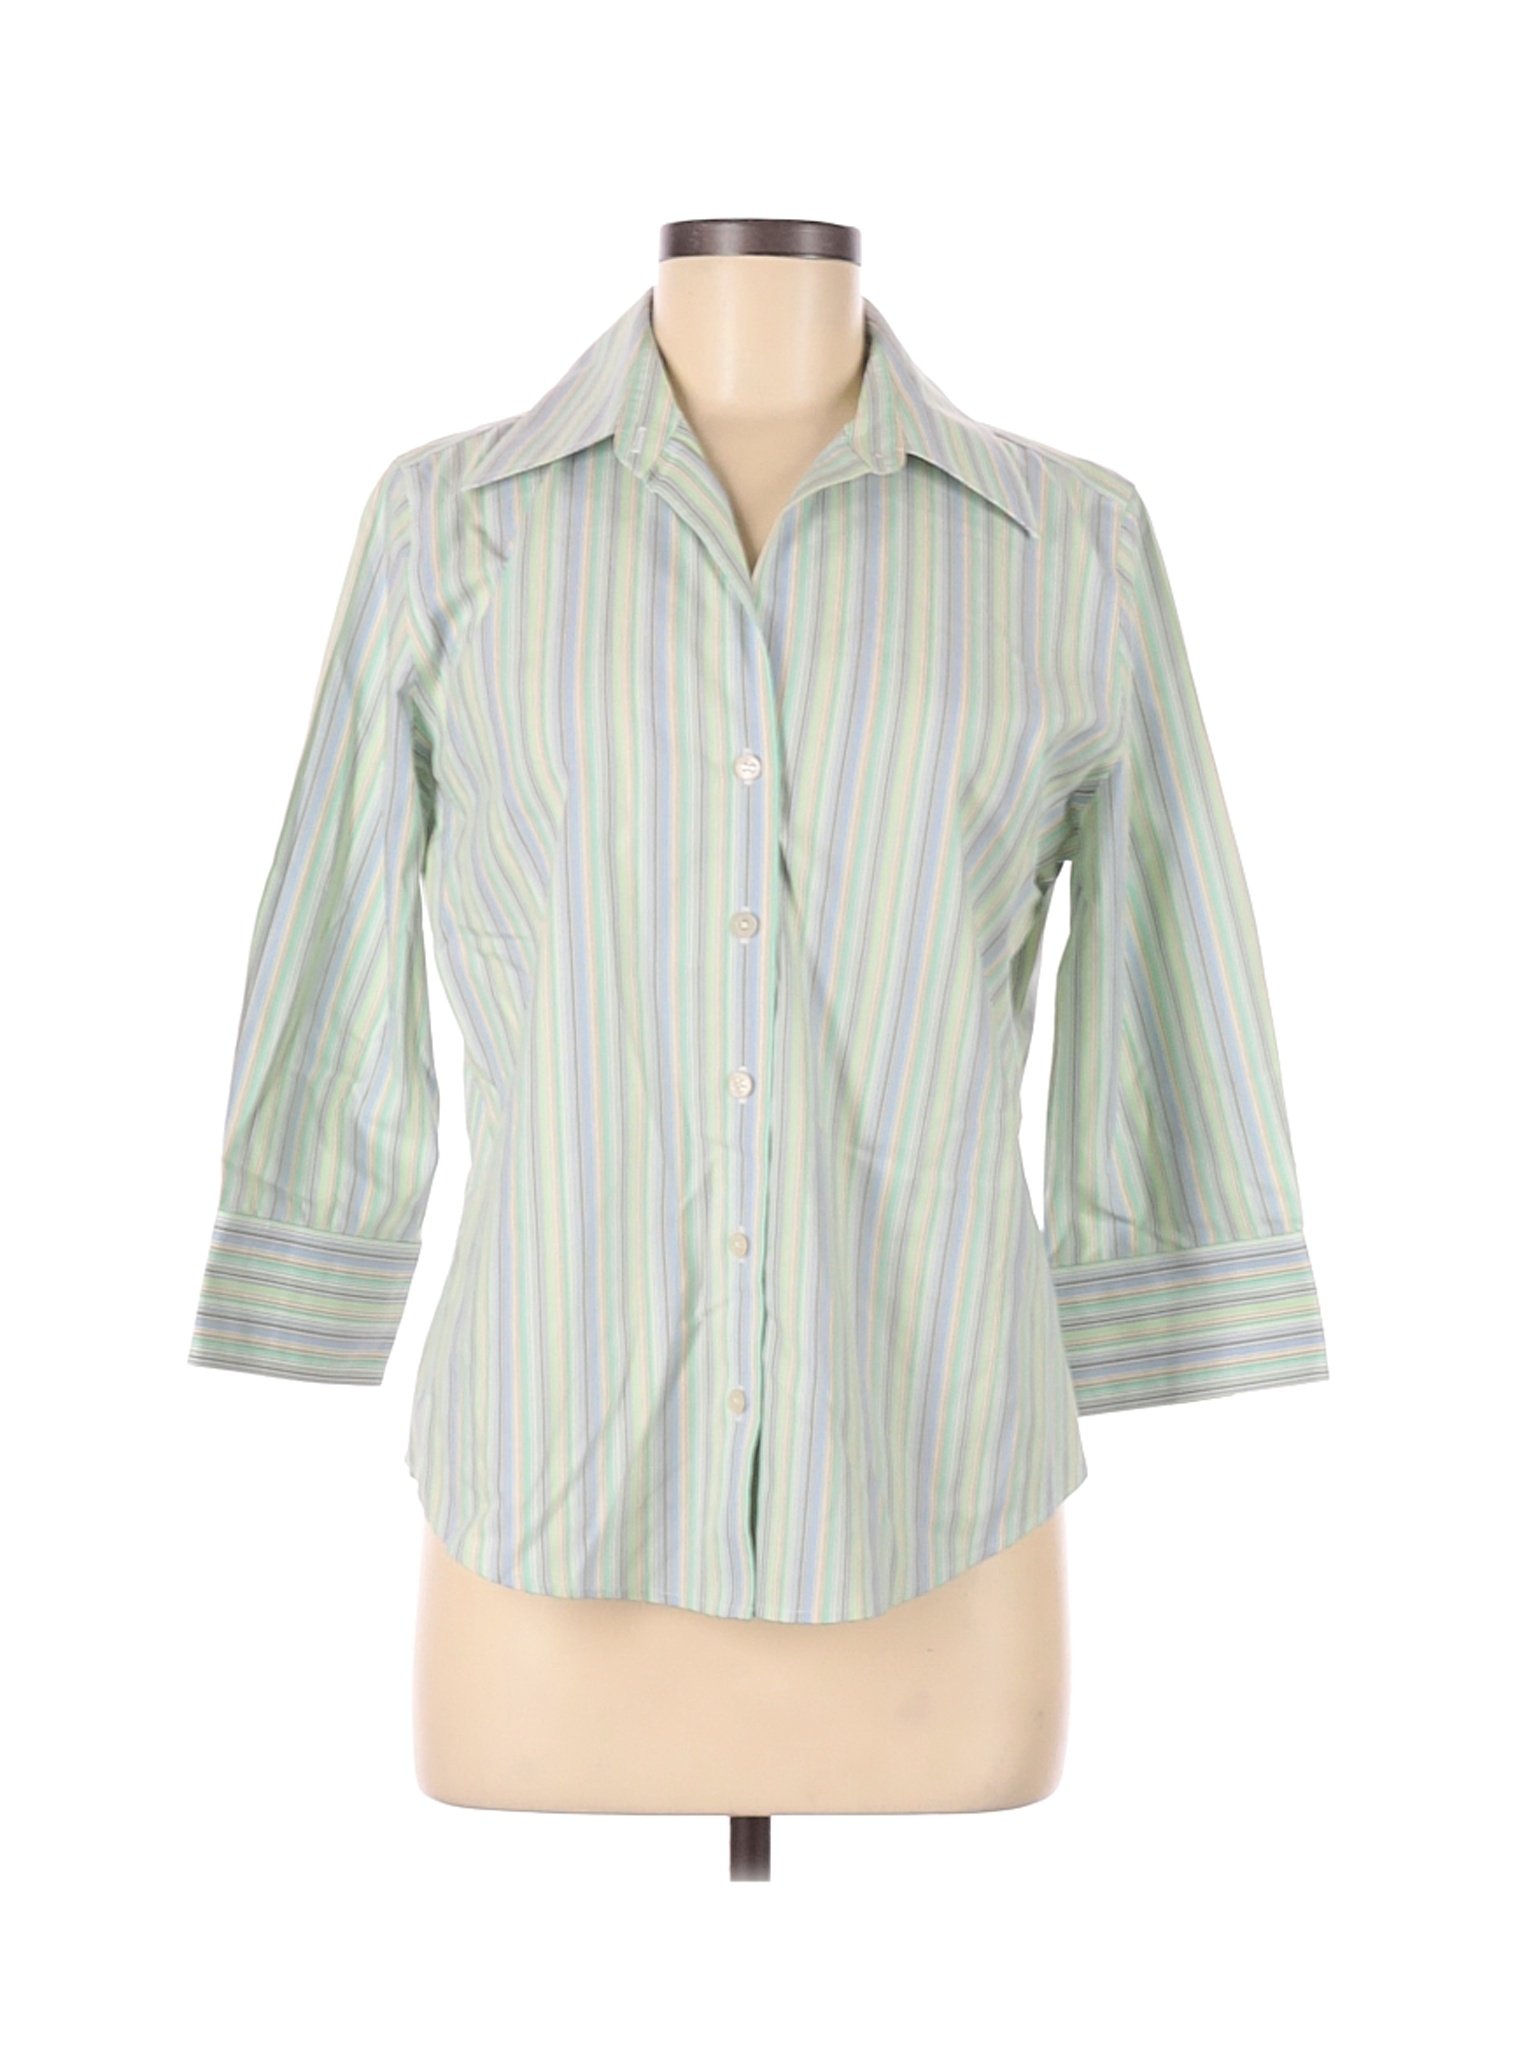 Eddie Bauer Women Green Long Sleeve Top M | eBay